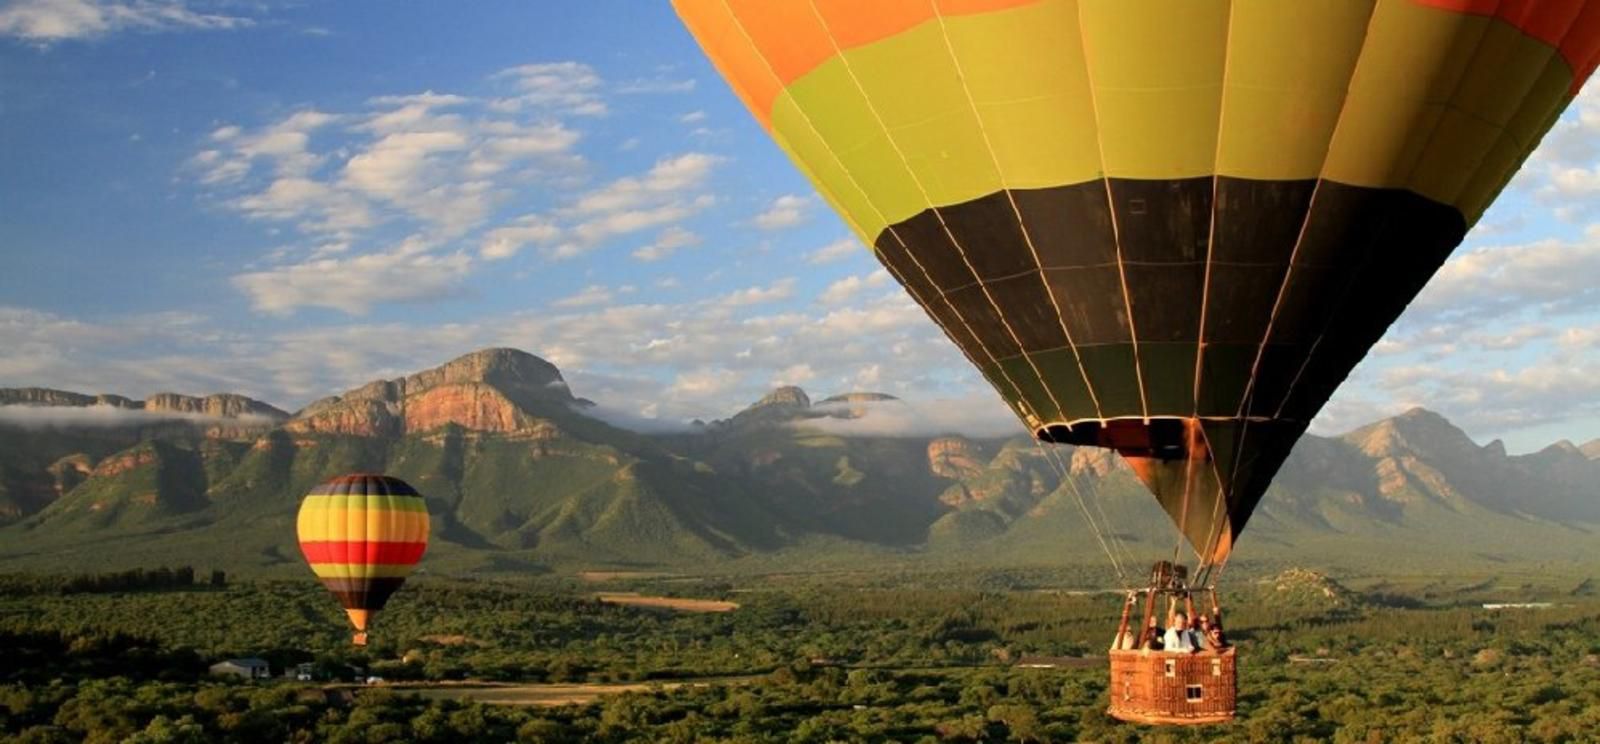 Shongane Safaris Hoedspruit Limpopo Province South Africa Aircraft, Vehicle, Hot Air Balloon, Sky, Nature